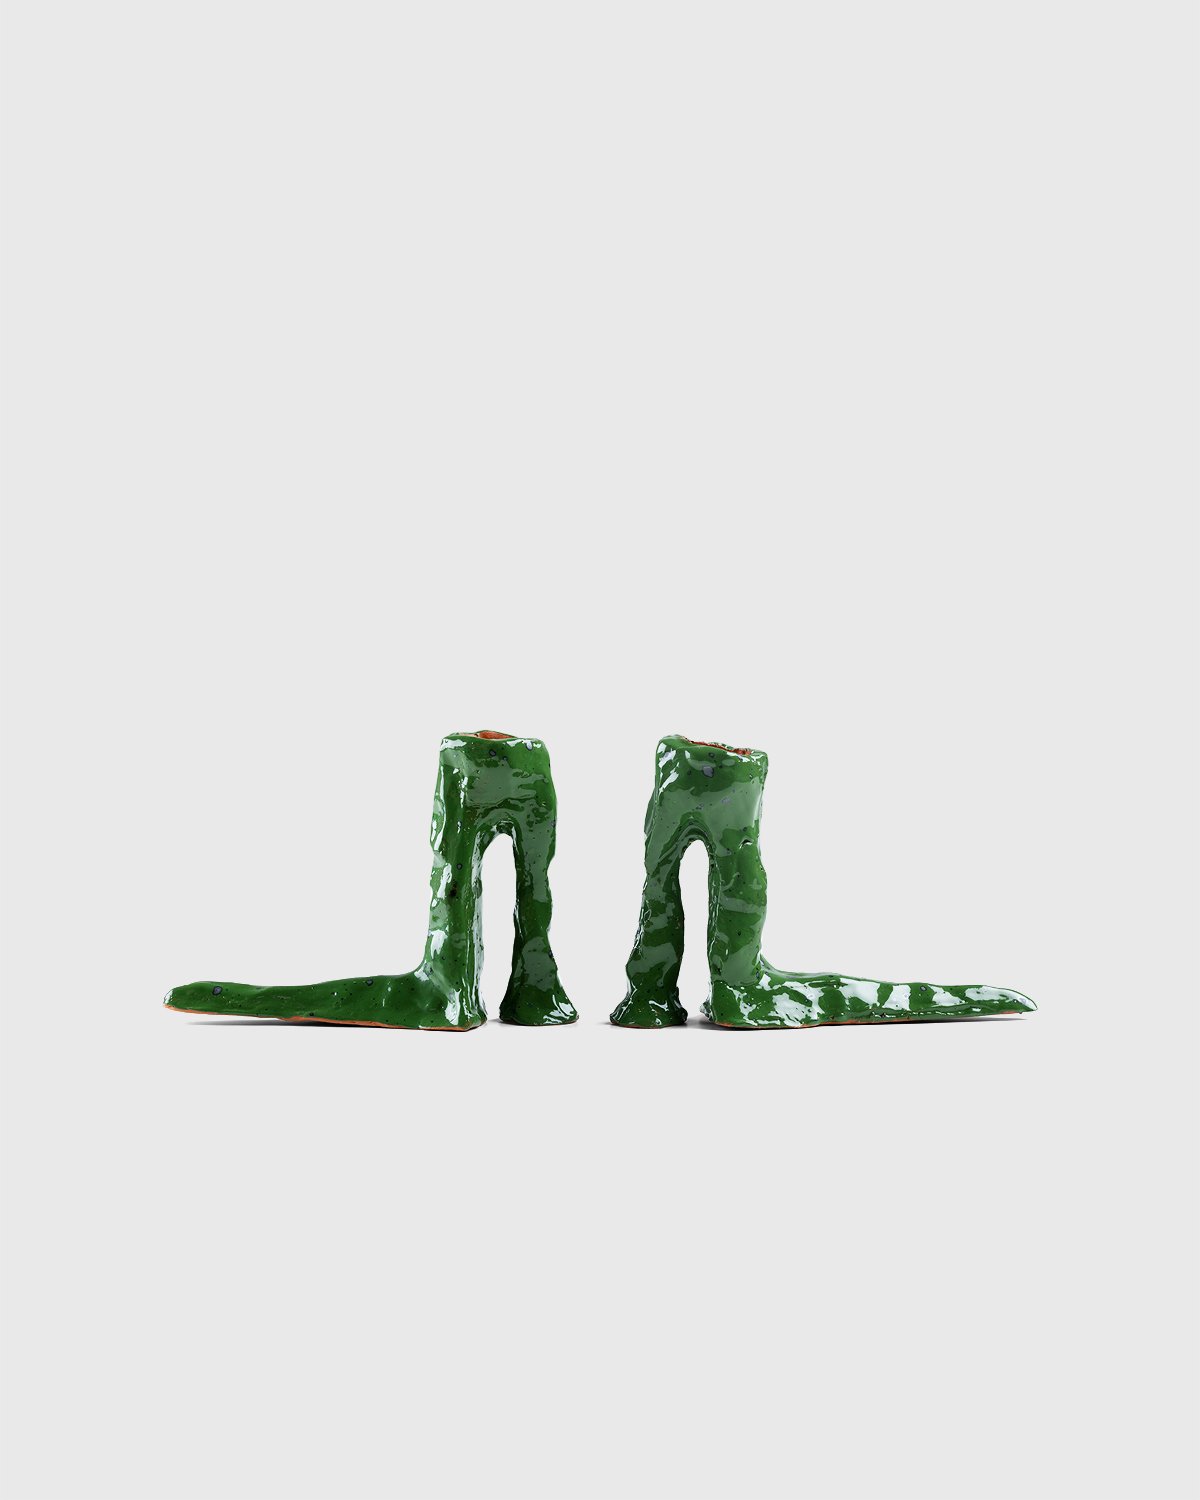 Laura Welker - Hot Legs Candle Holder Dark Green - Lifestyle - Green - Image 1